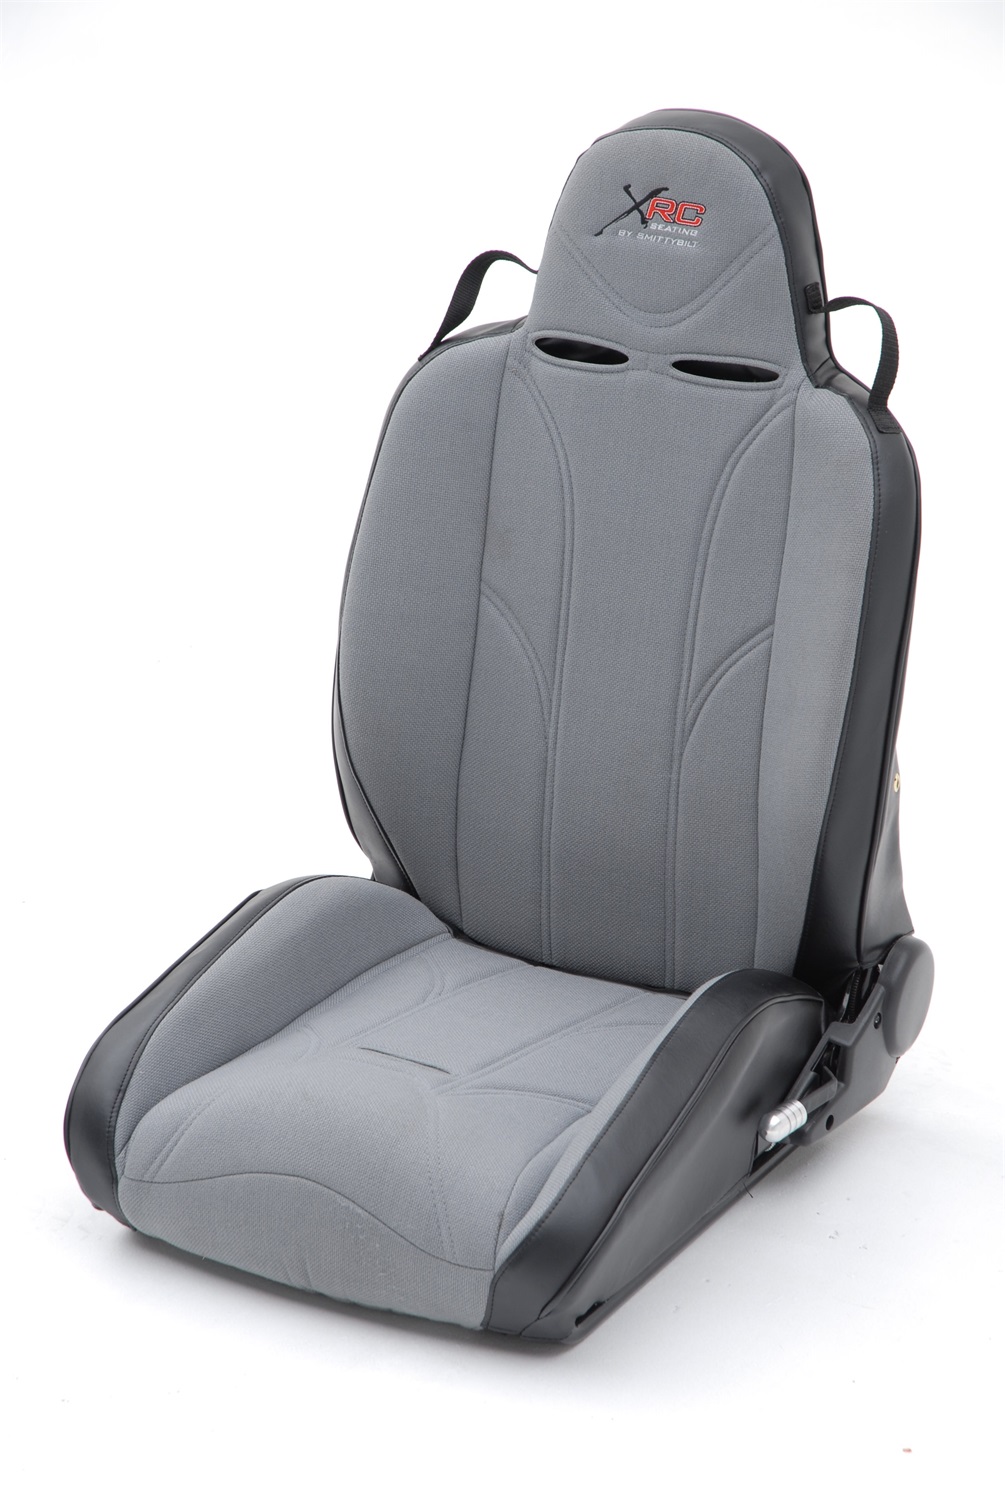 Smittybilt Smittybilt 759130 XRC Performance Seat Cover Fits 07-14 Wrangler (JK)